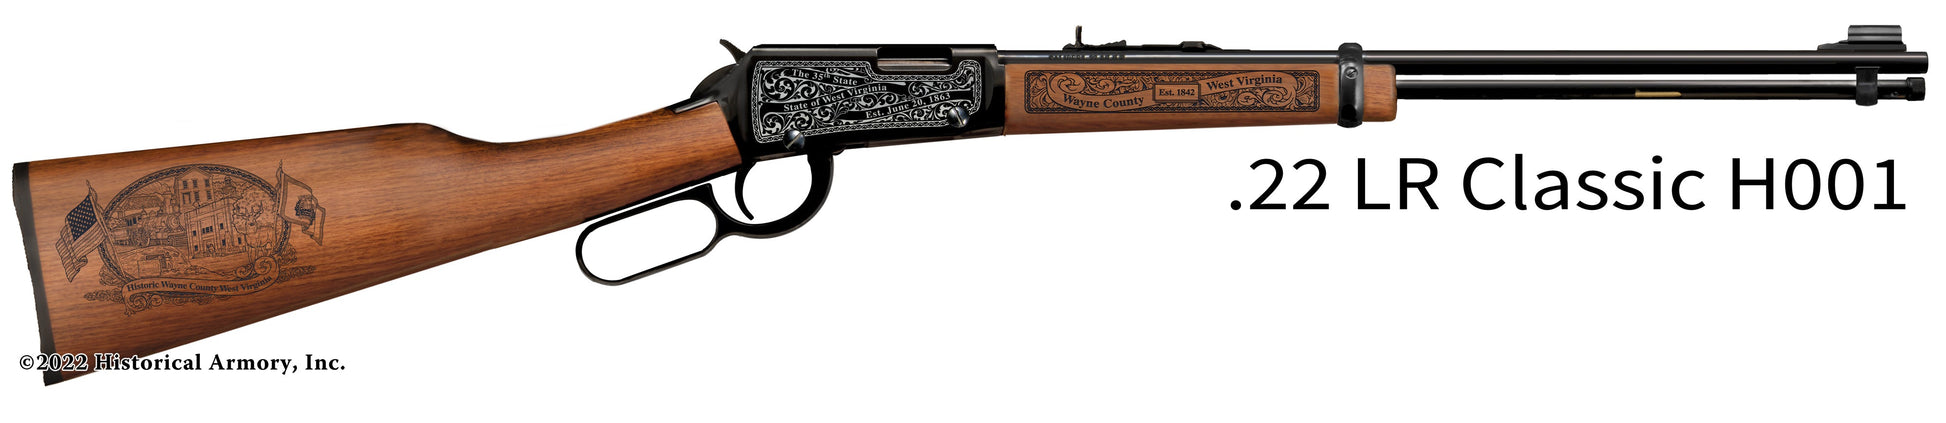 Wayne County West Virginia Engraved Henry H001 Rifle